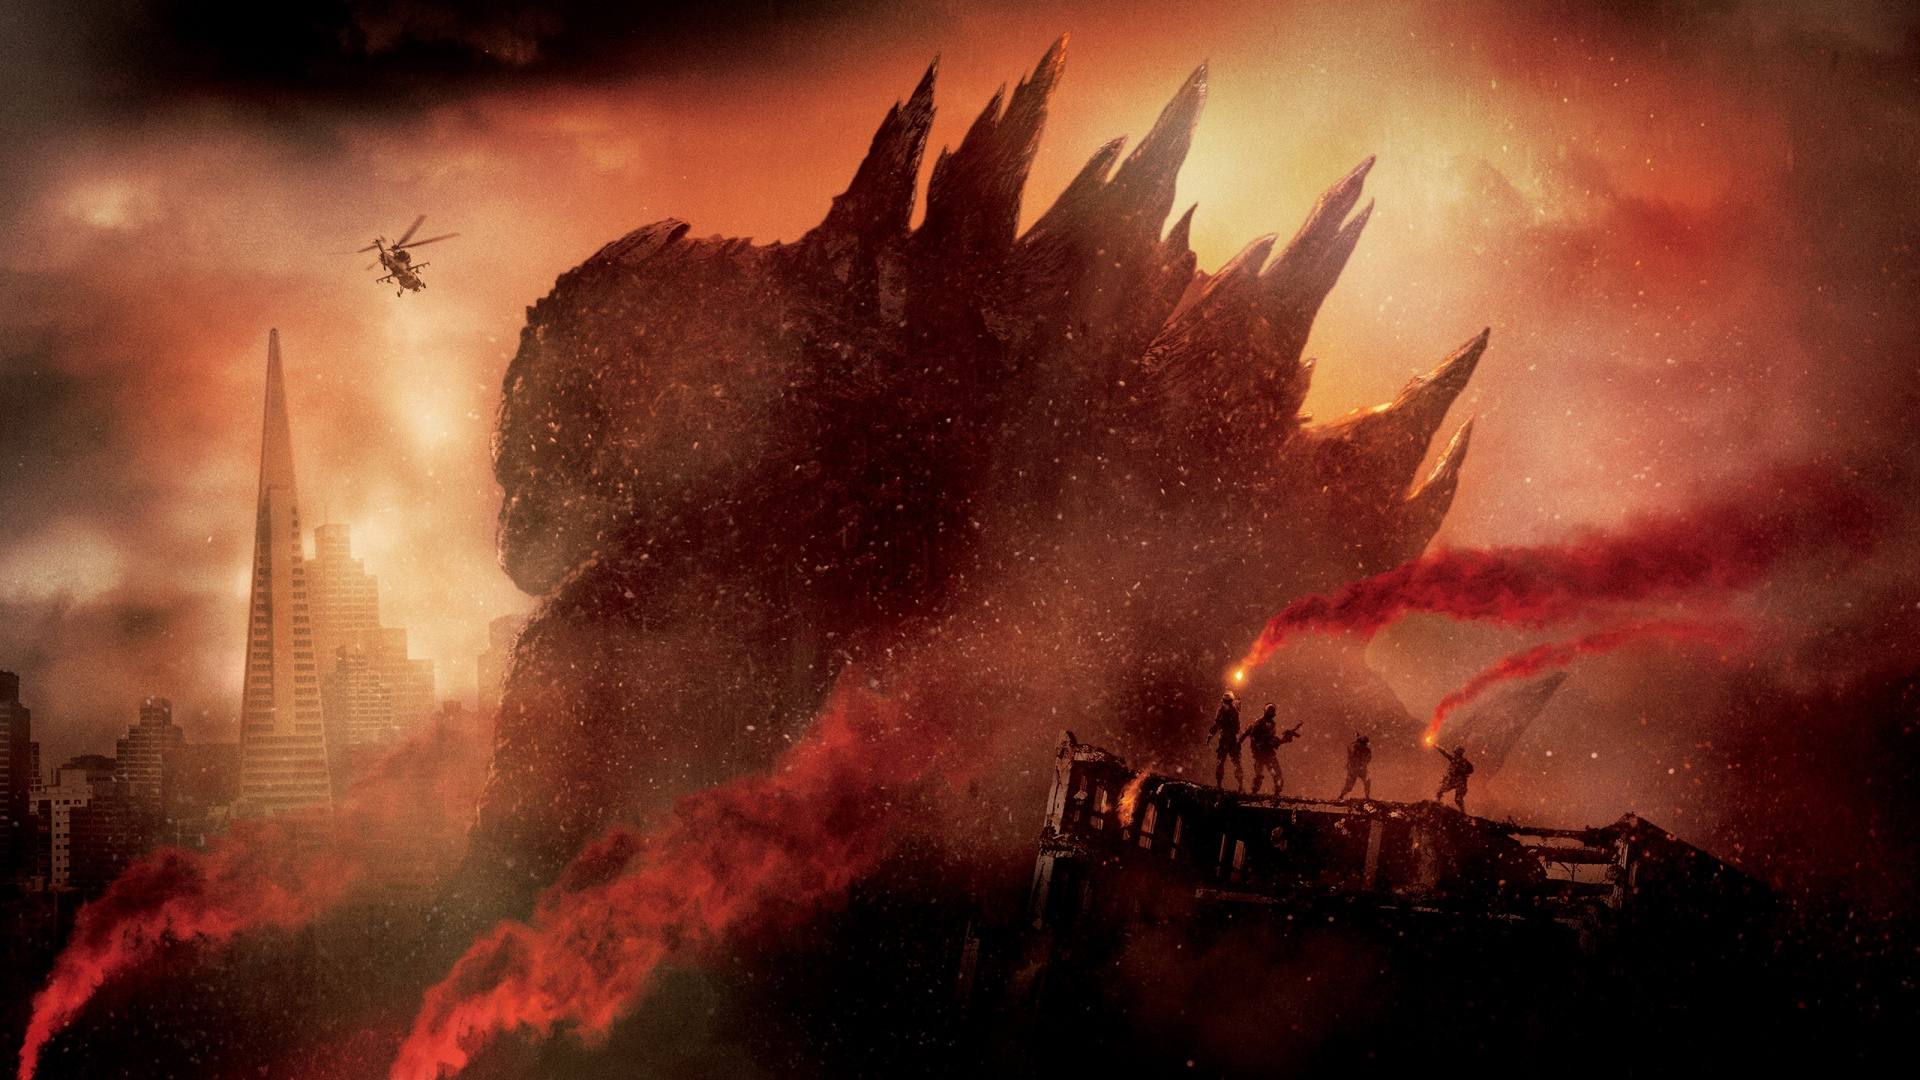 Film Fantascienza Gdzll Godzilla Monster Movie